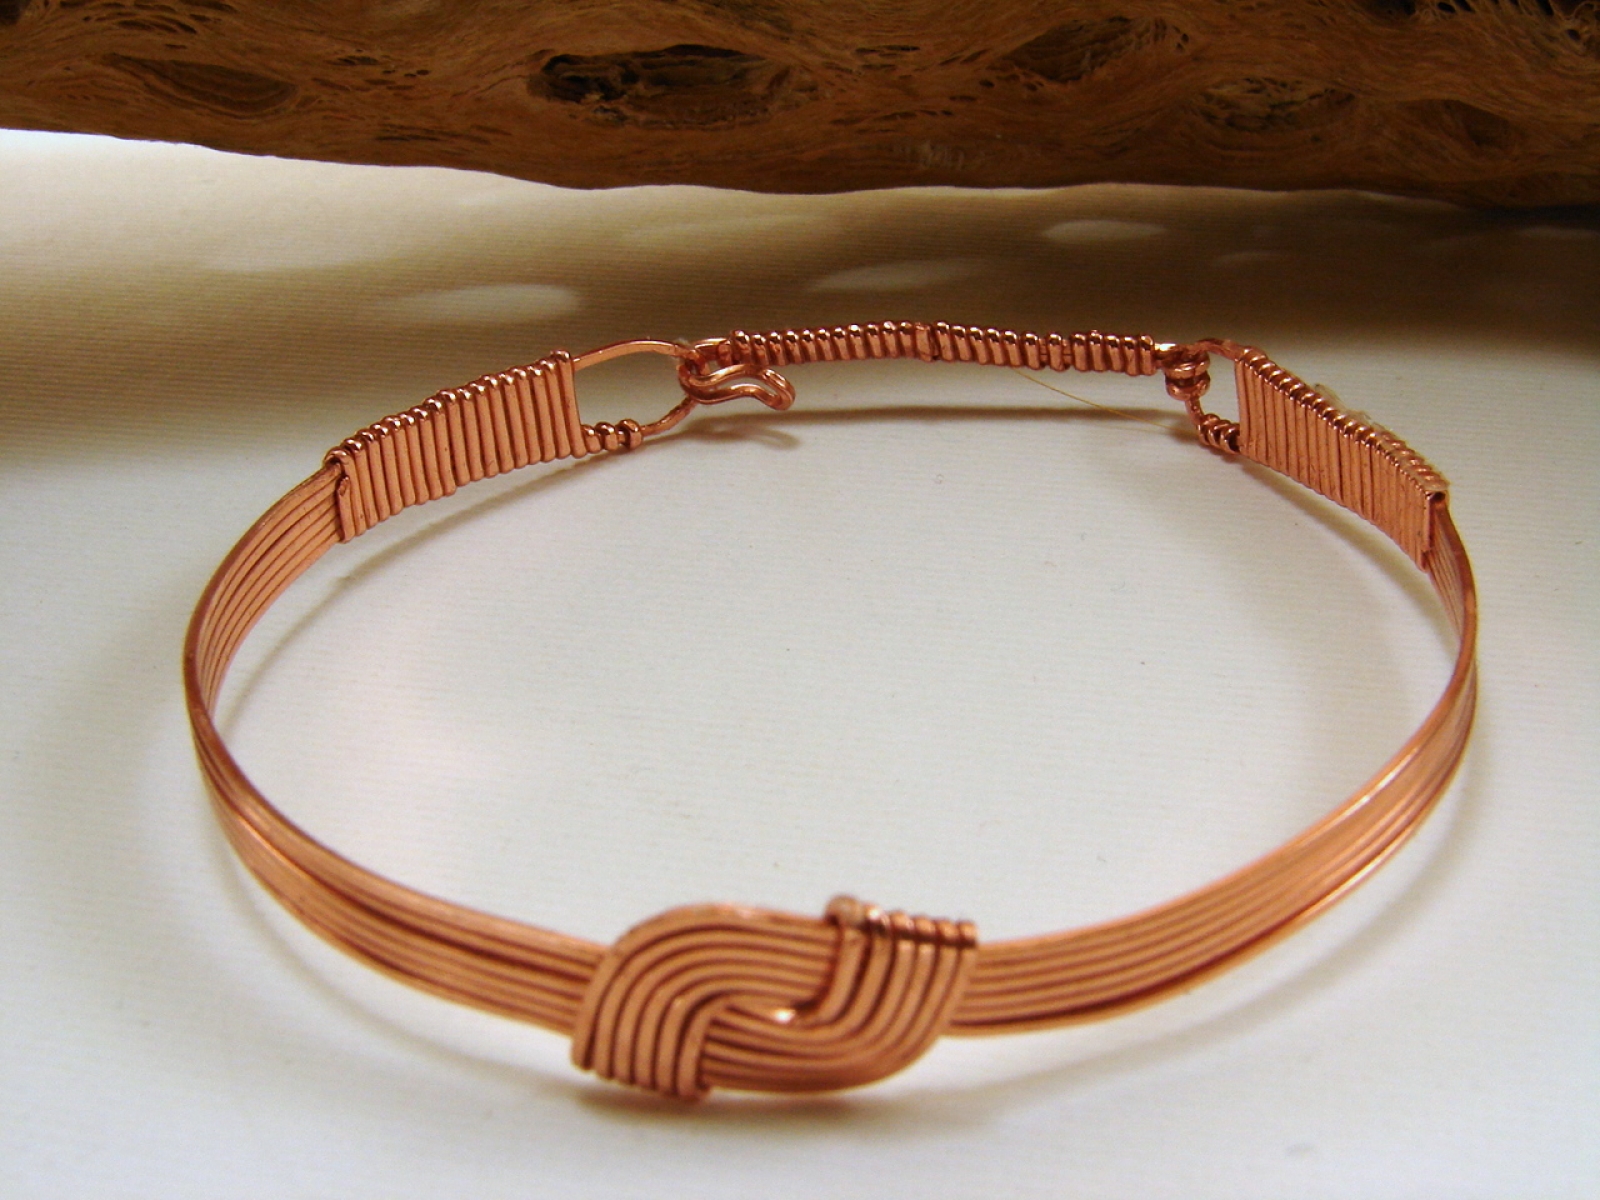 Copper Wire Wrapped Bracelet by Gailavira on DeviantArt